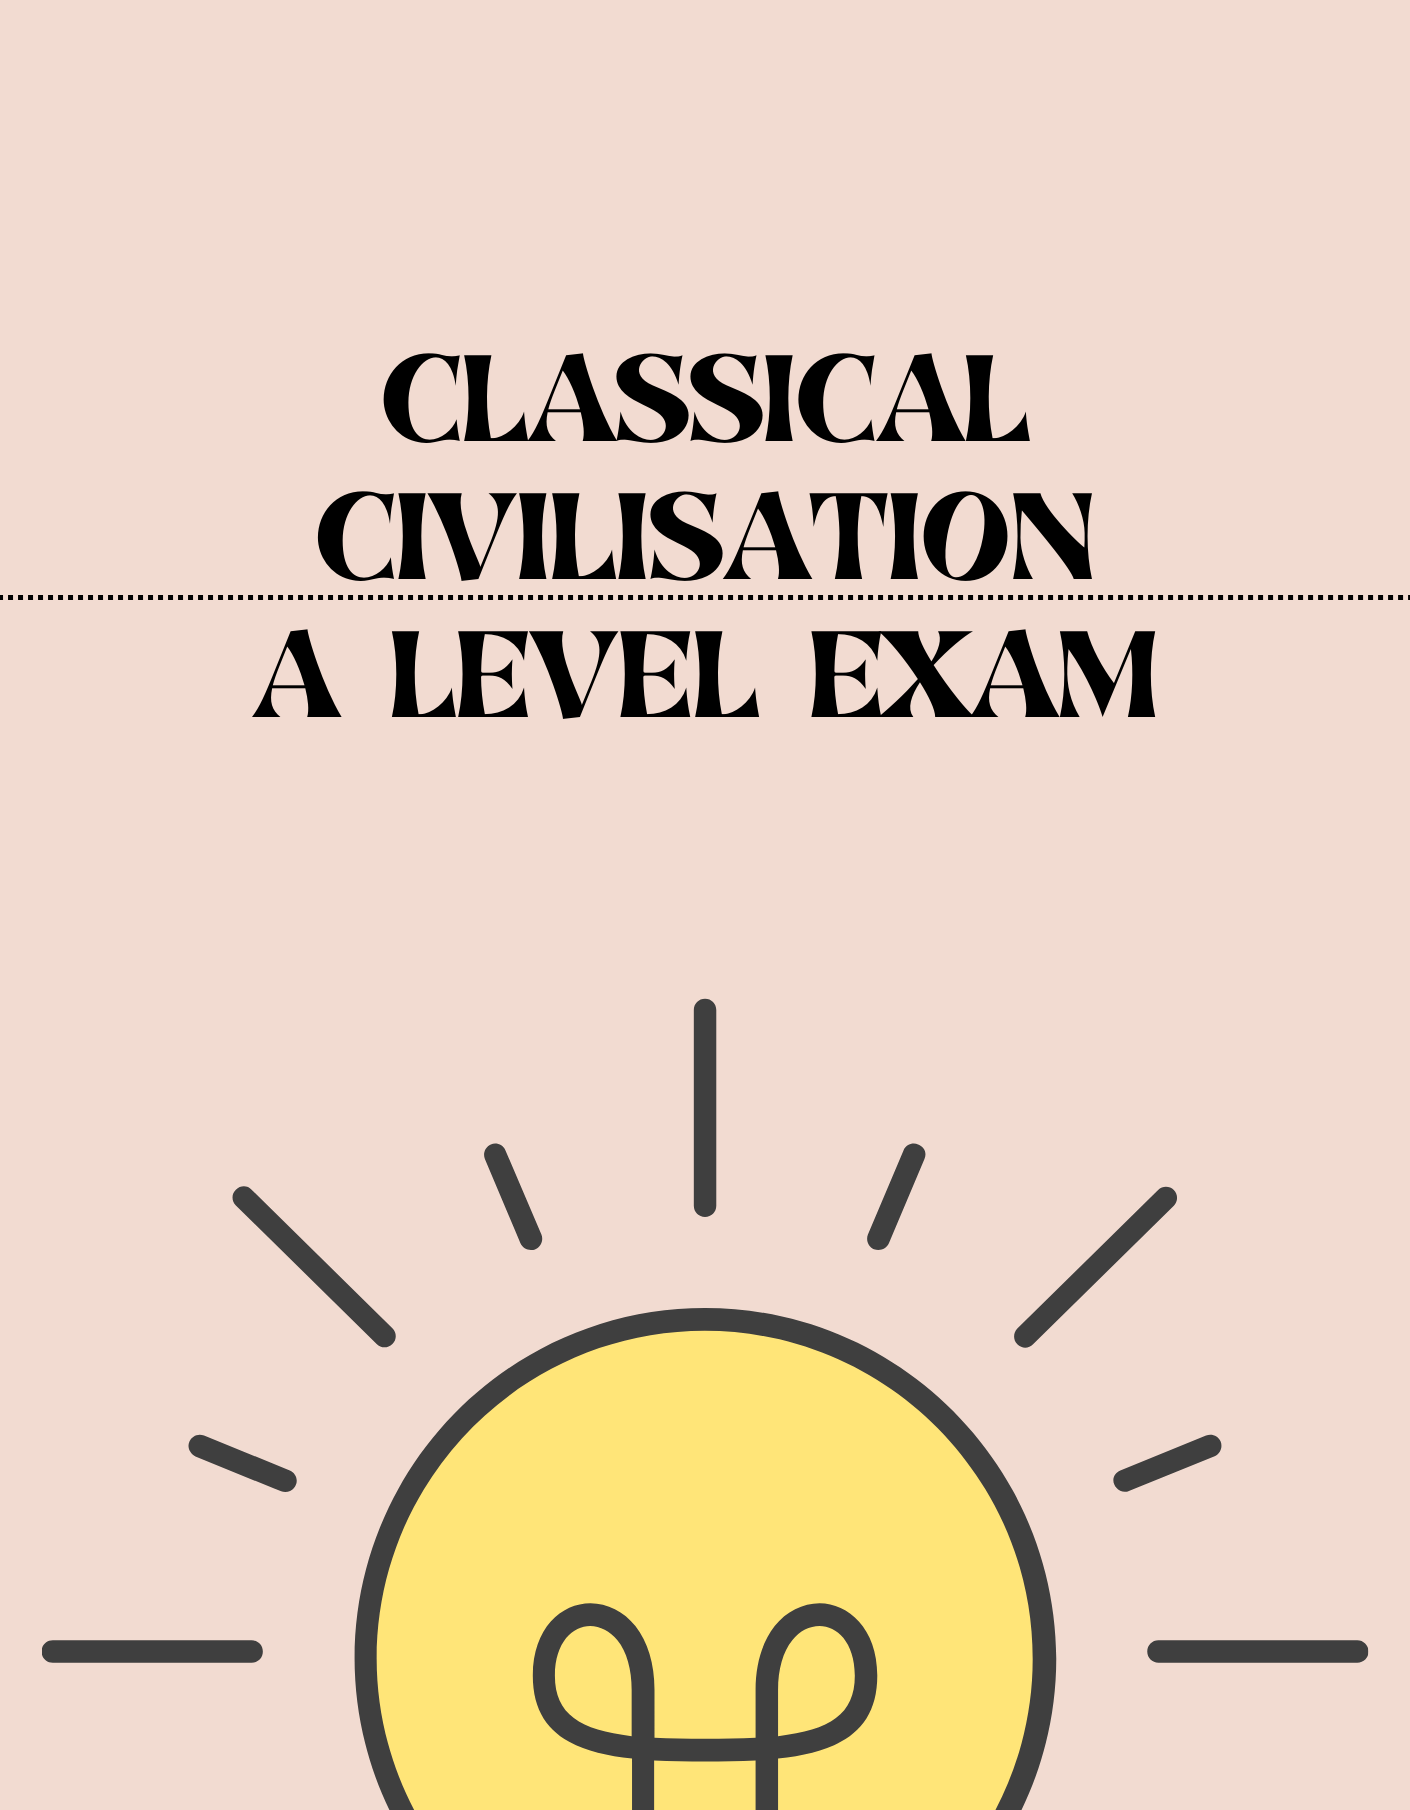 A Level - Classical Civilisation Exam - Exam Centre Birmingham Limited